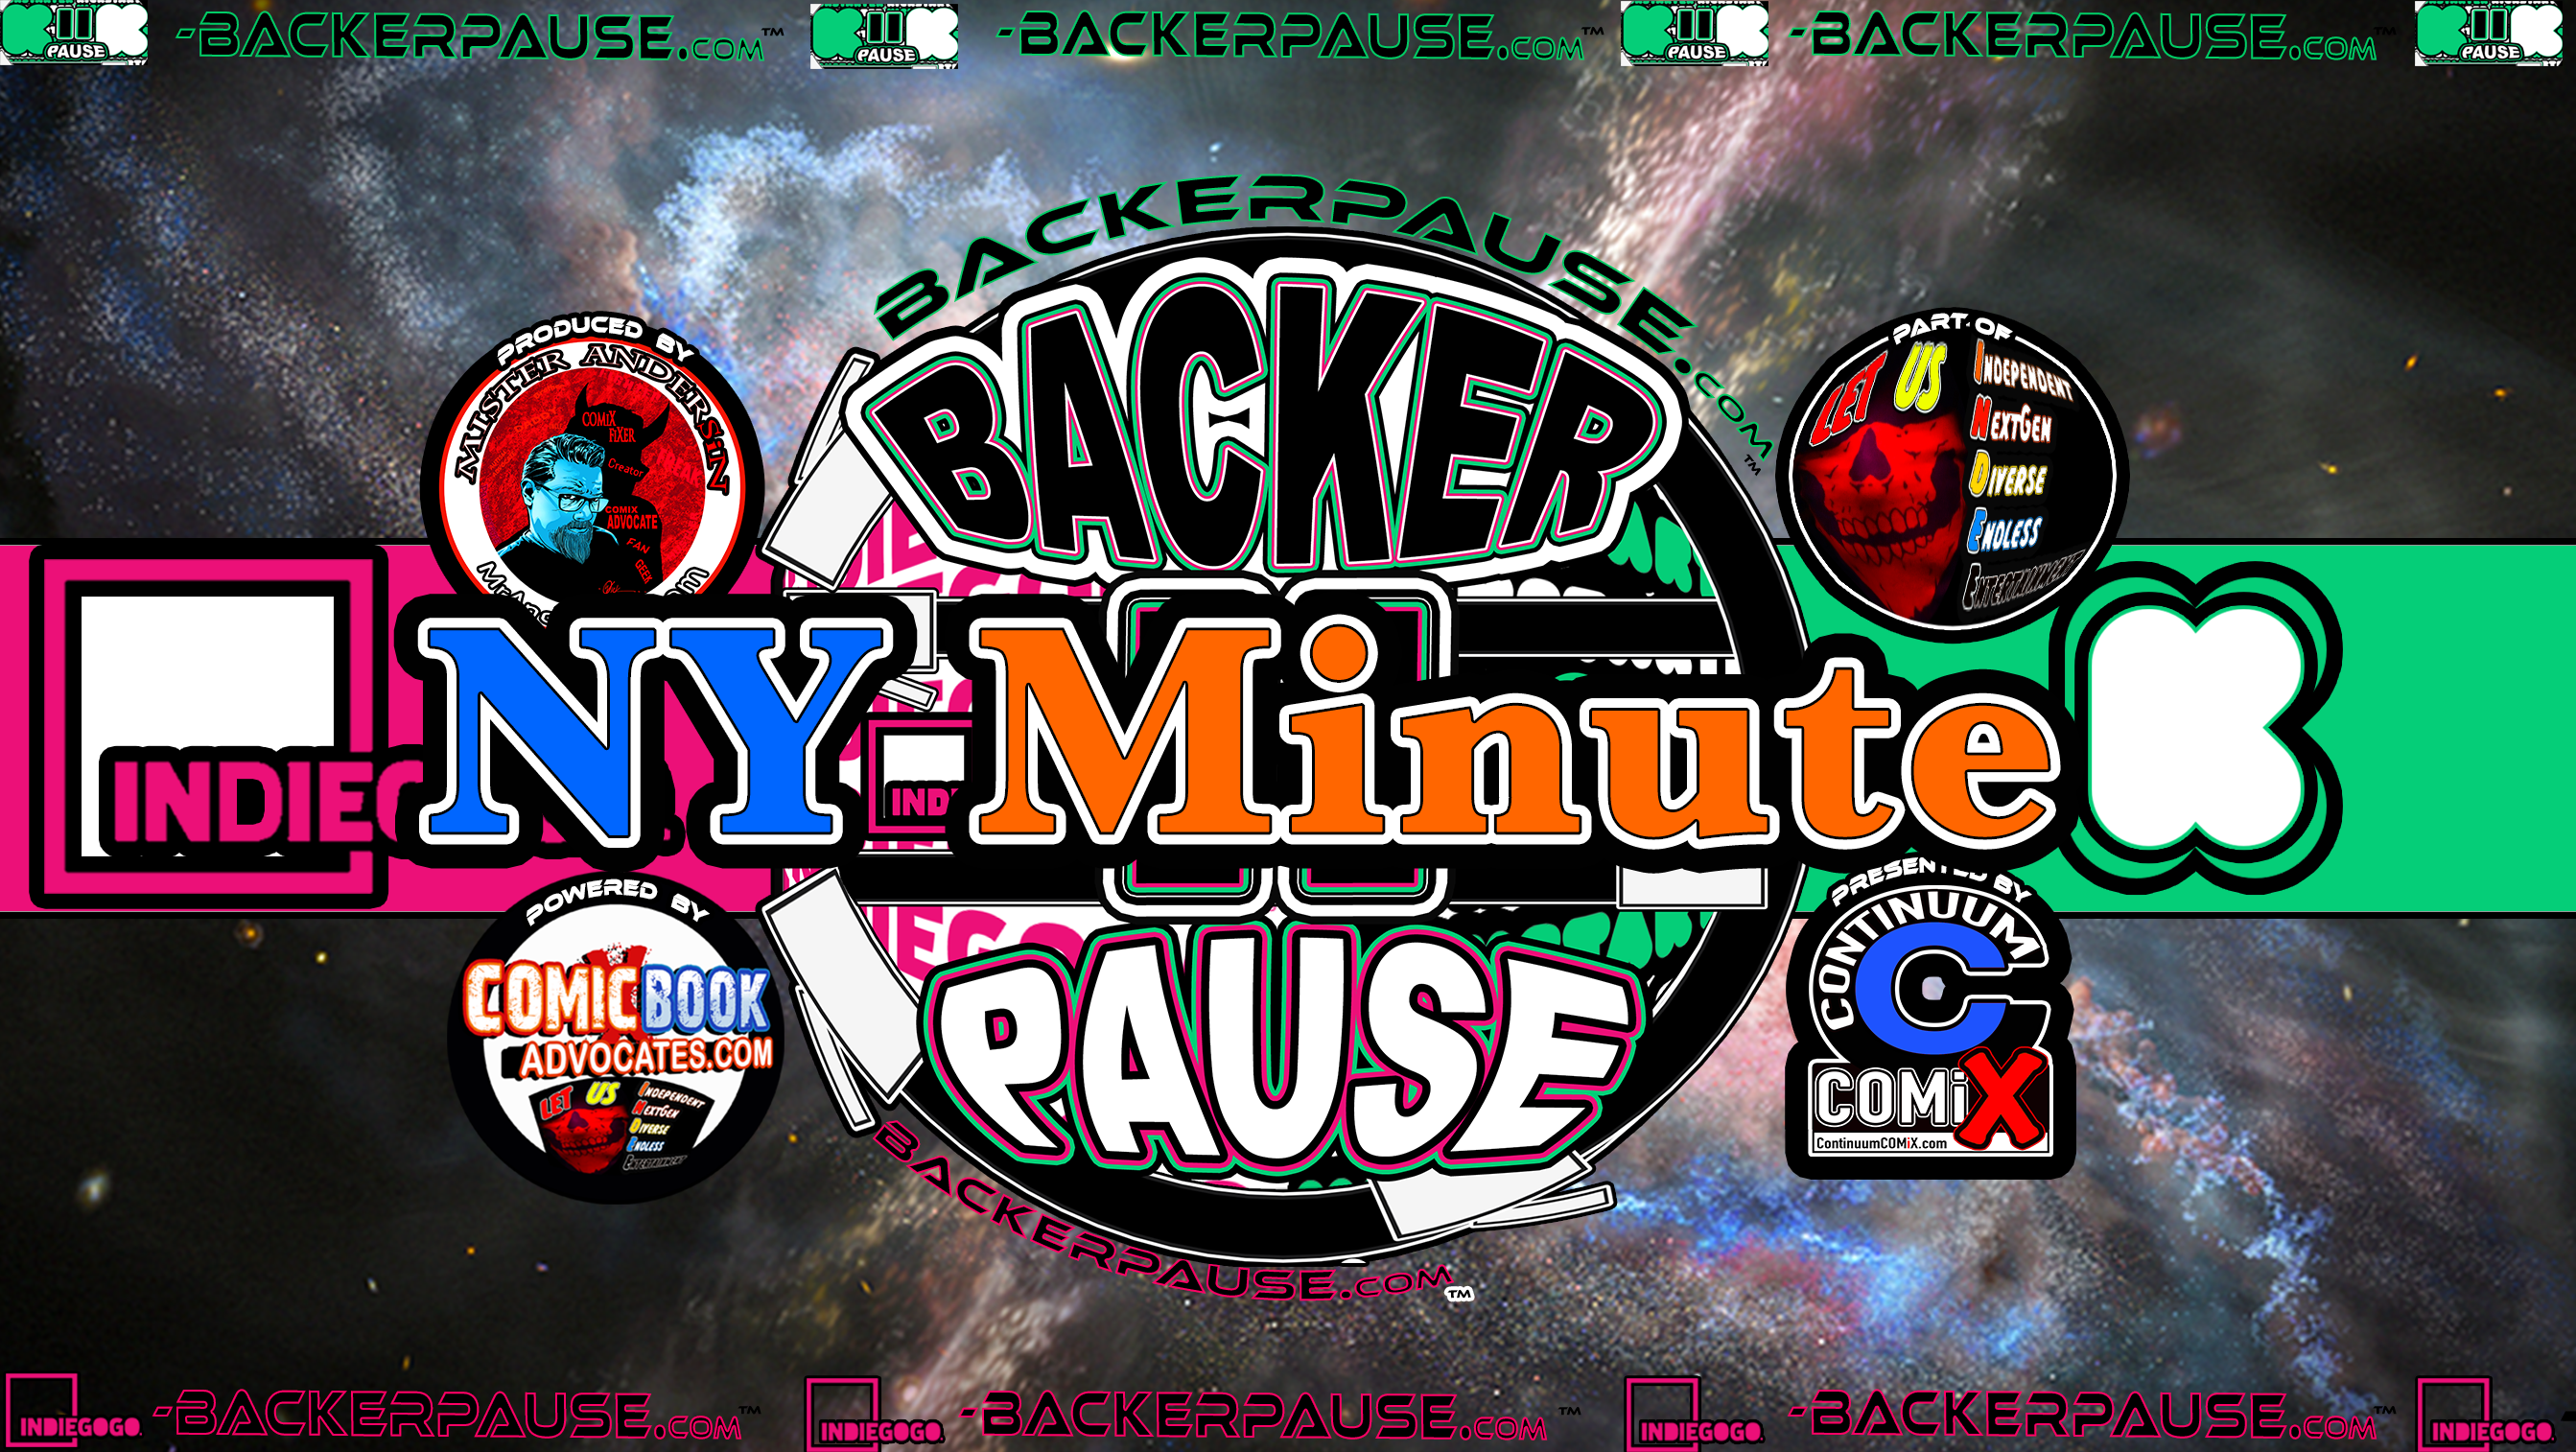 BACKER PAUSE.com in a NY Minute